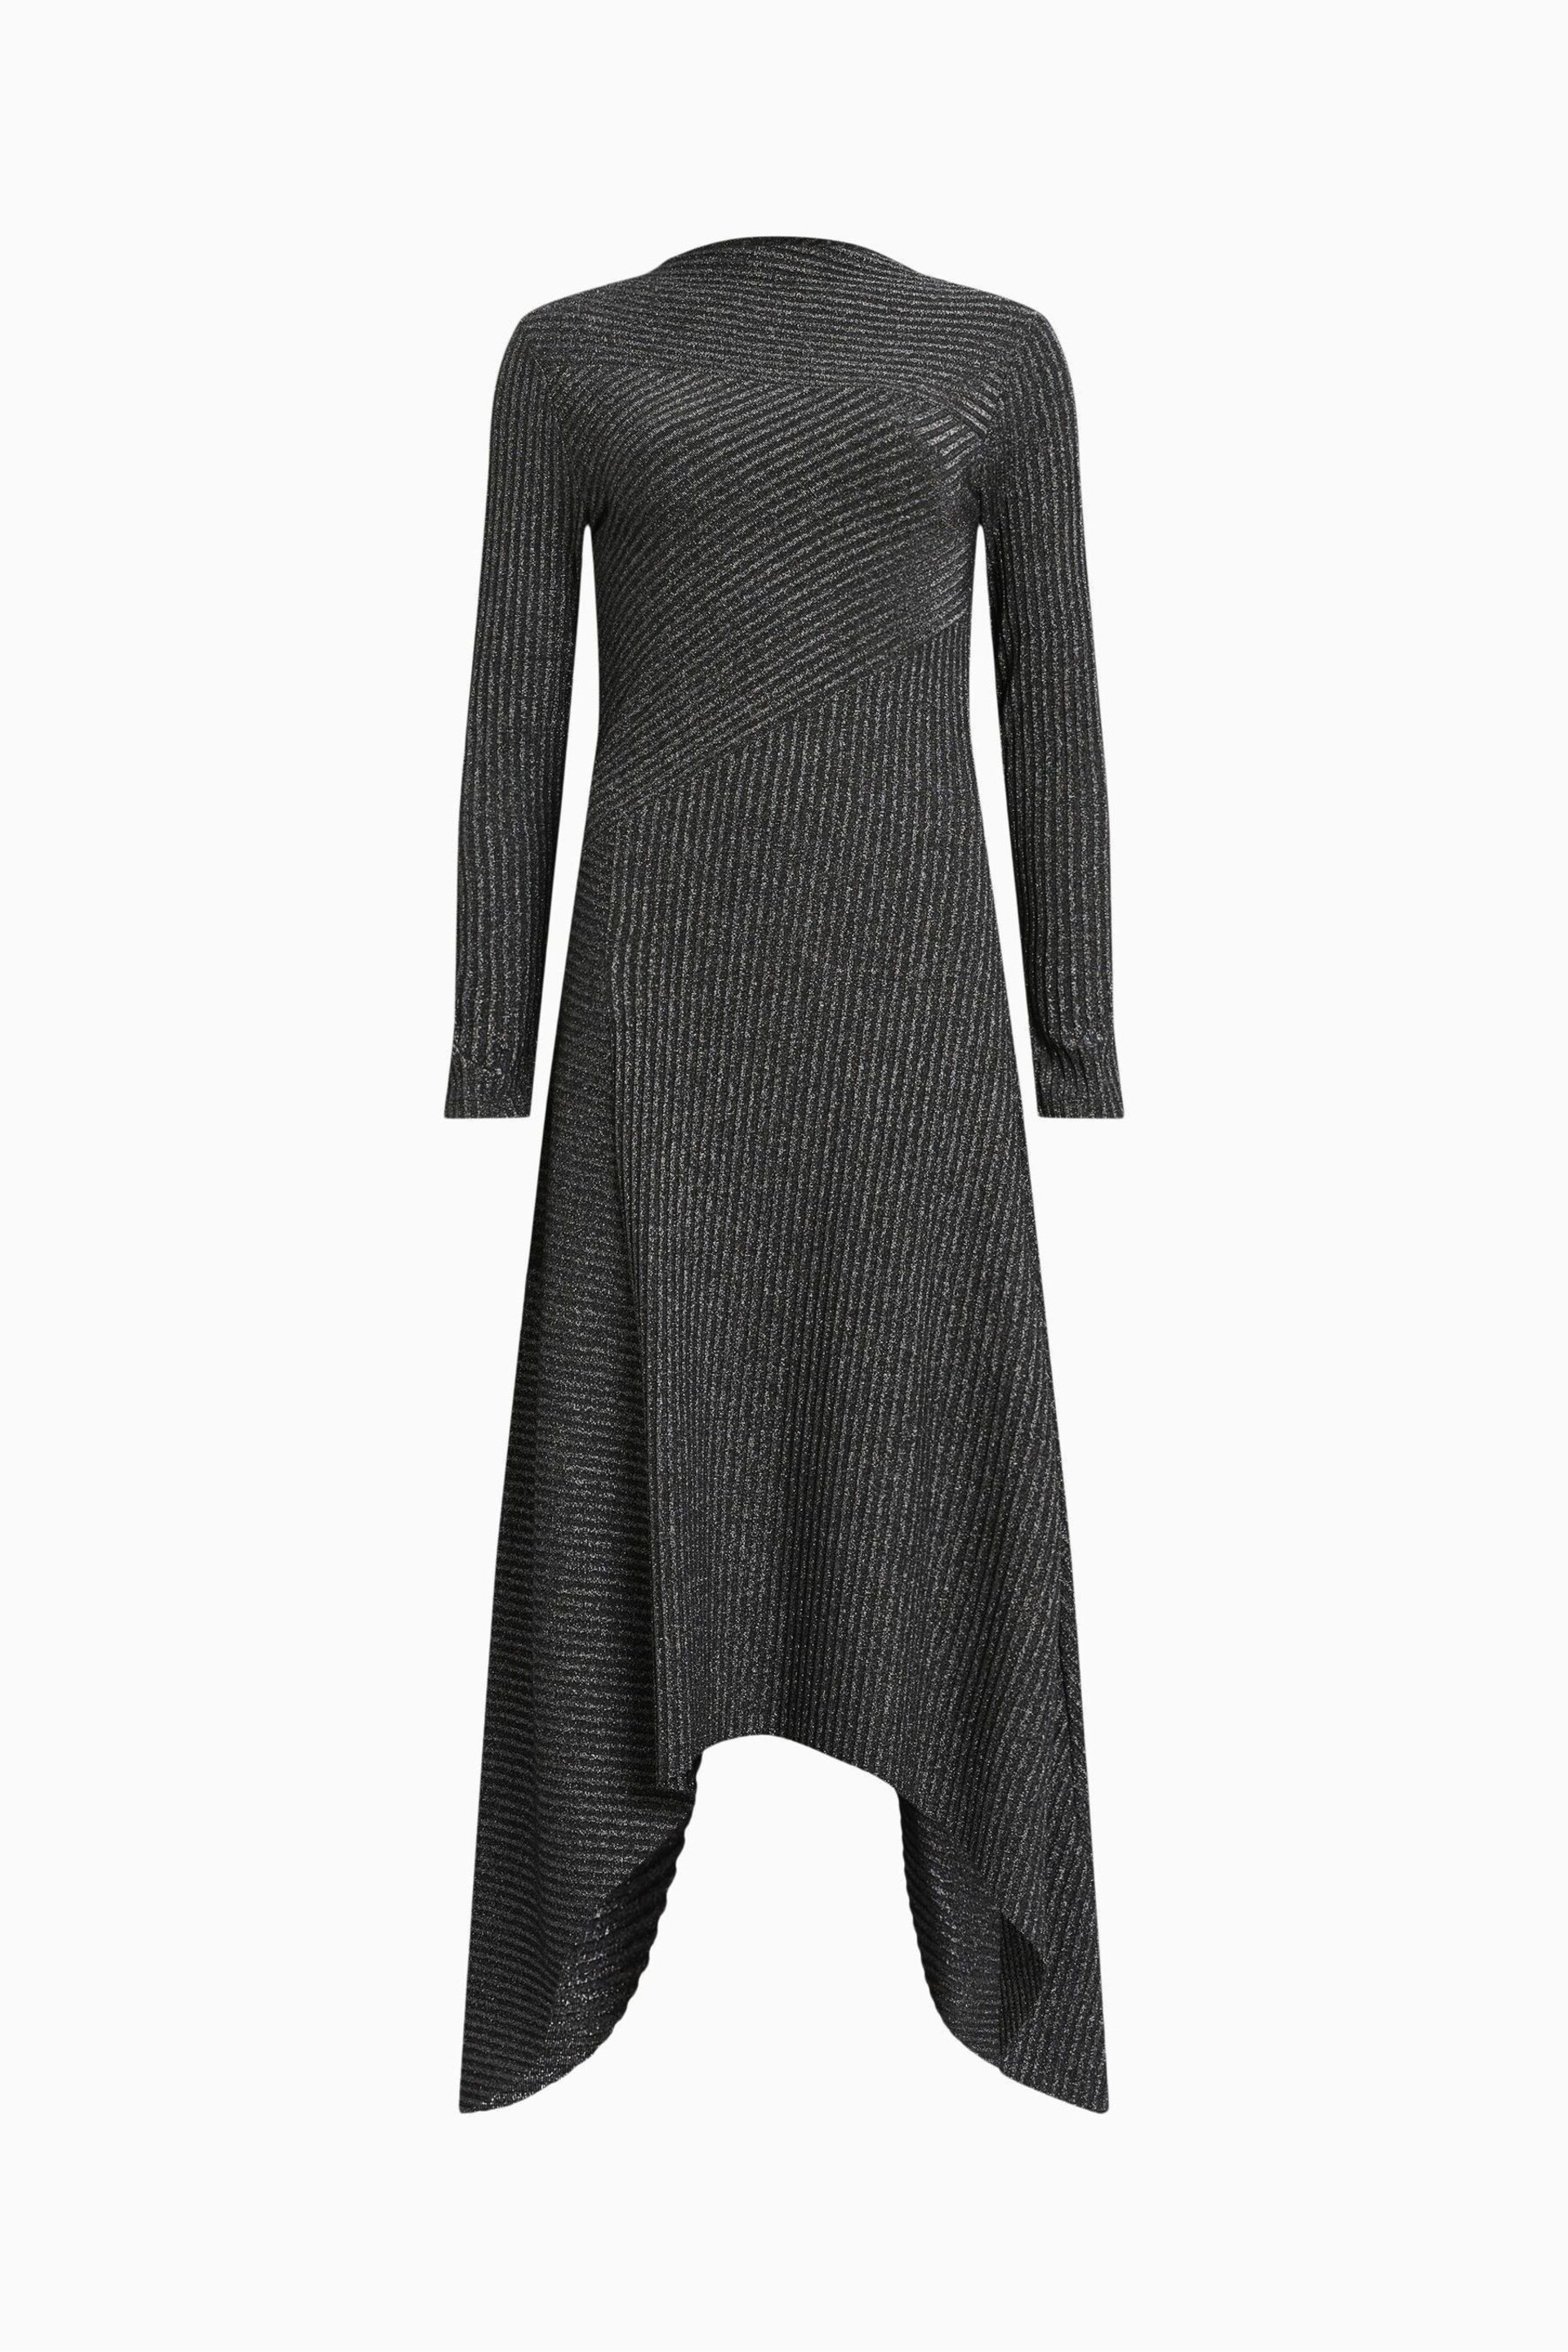 AllSaints Grey Gia Sparkle Dress - Image 8 of 8